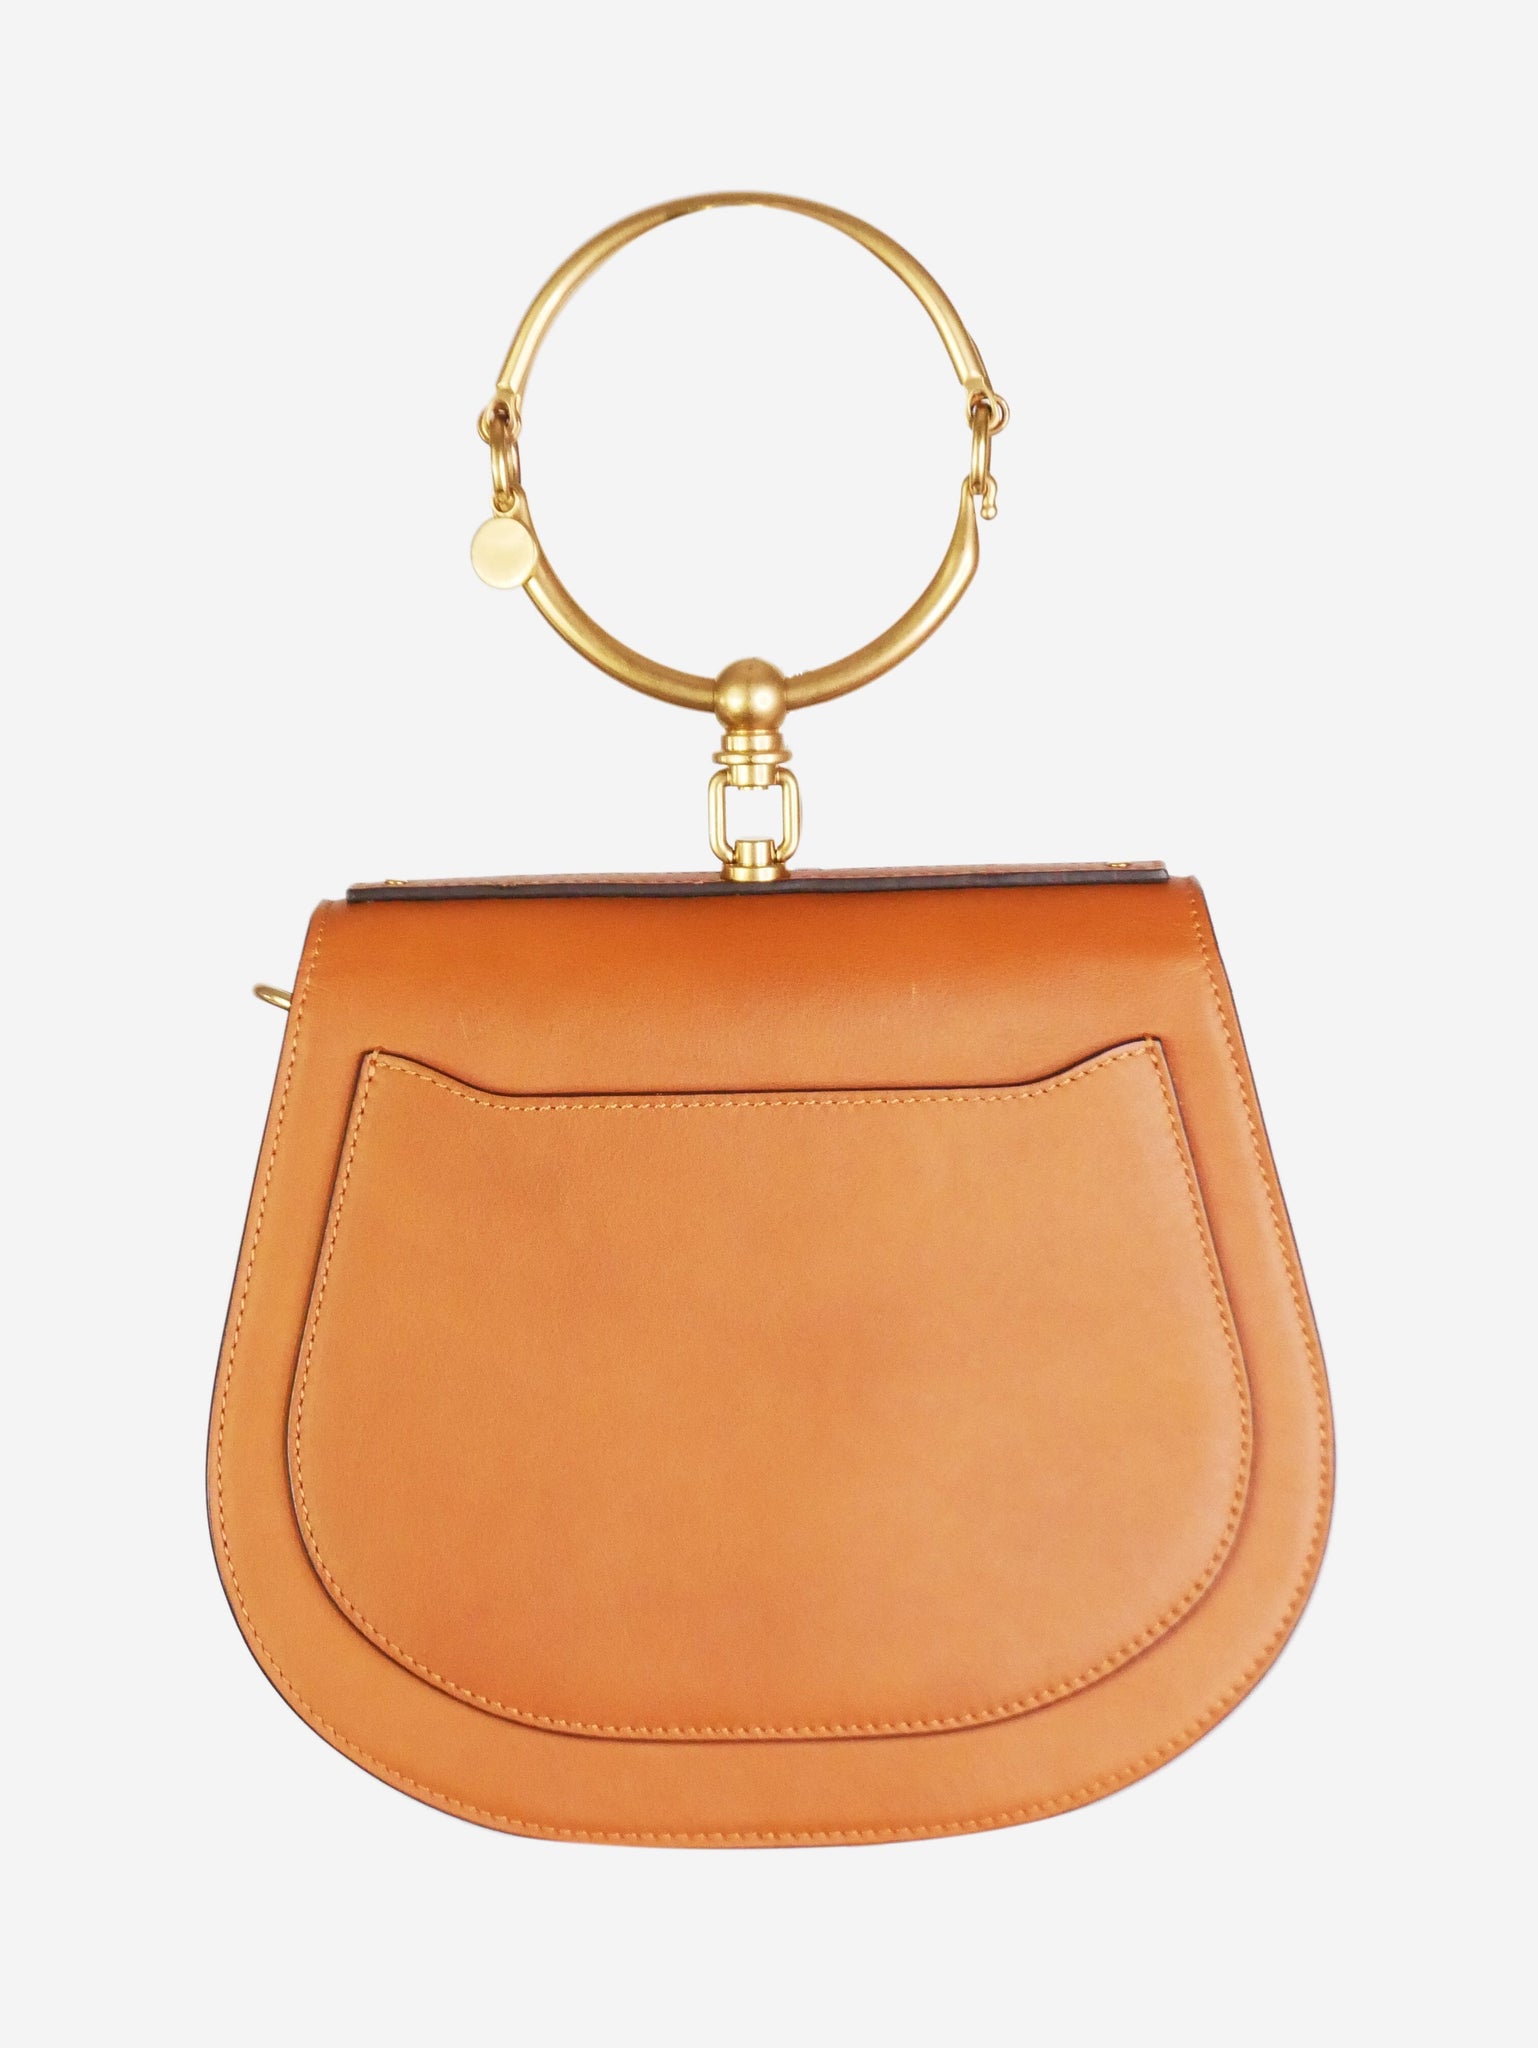 Get the designer Chloe Nile-inspired bag for less at Very online